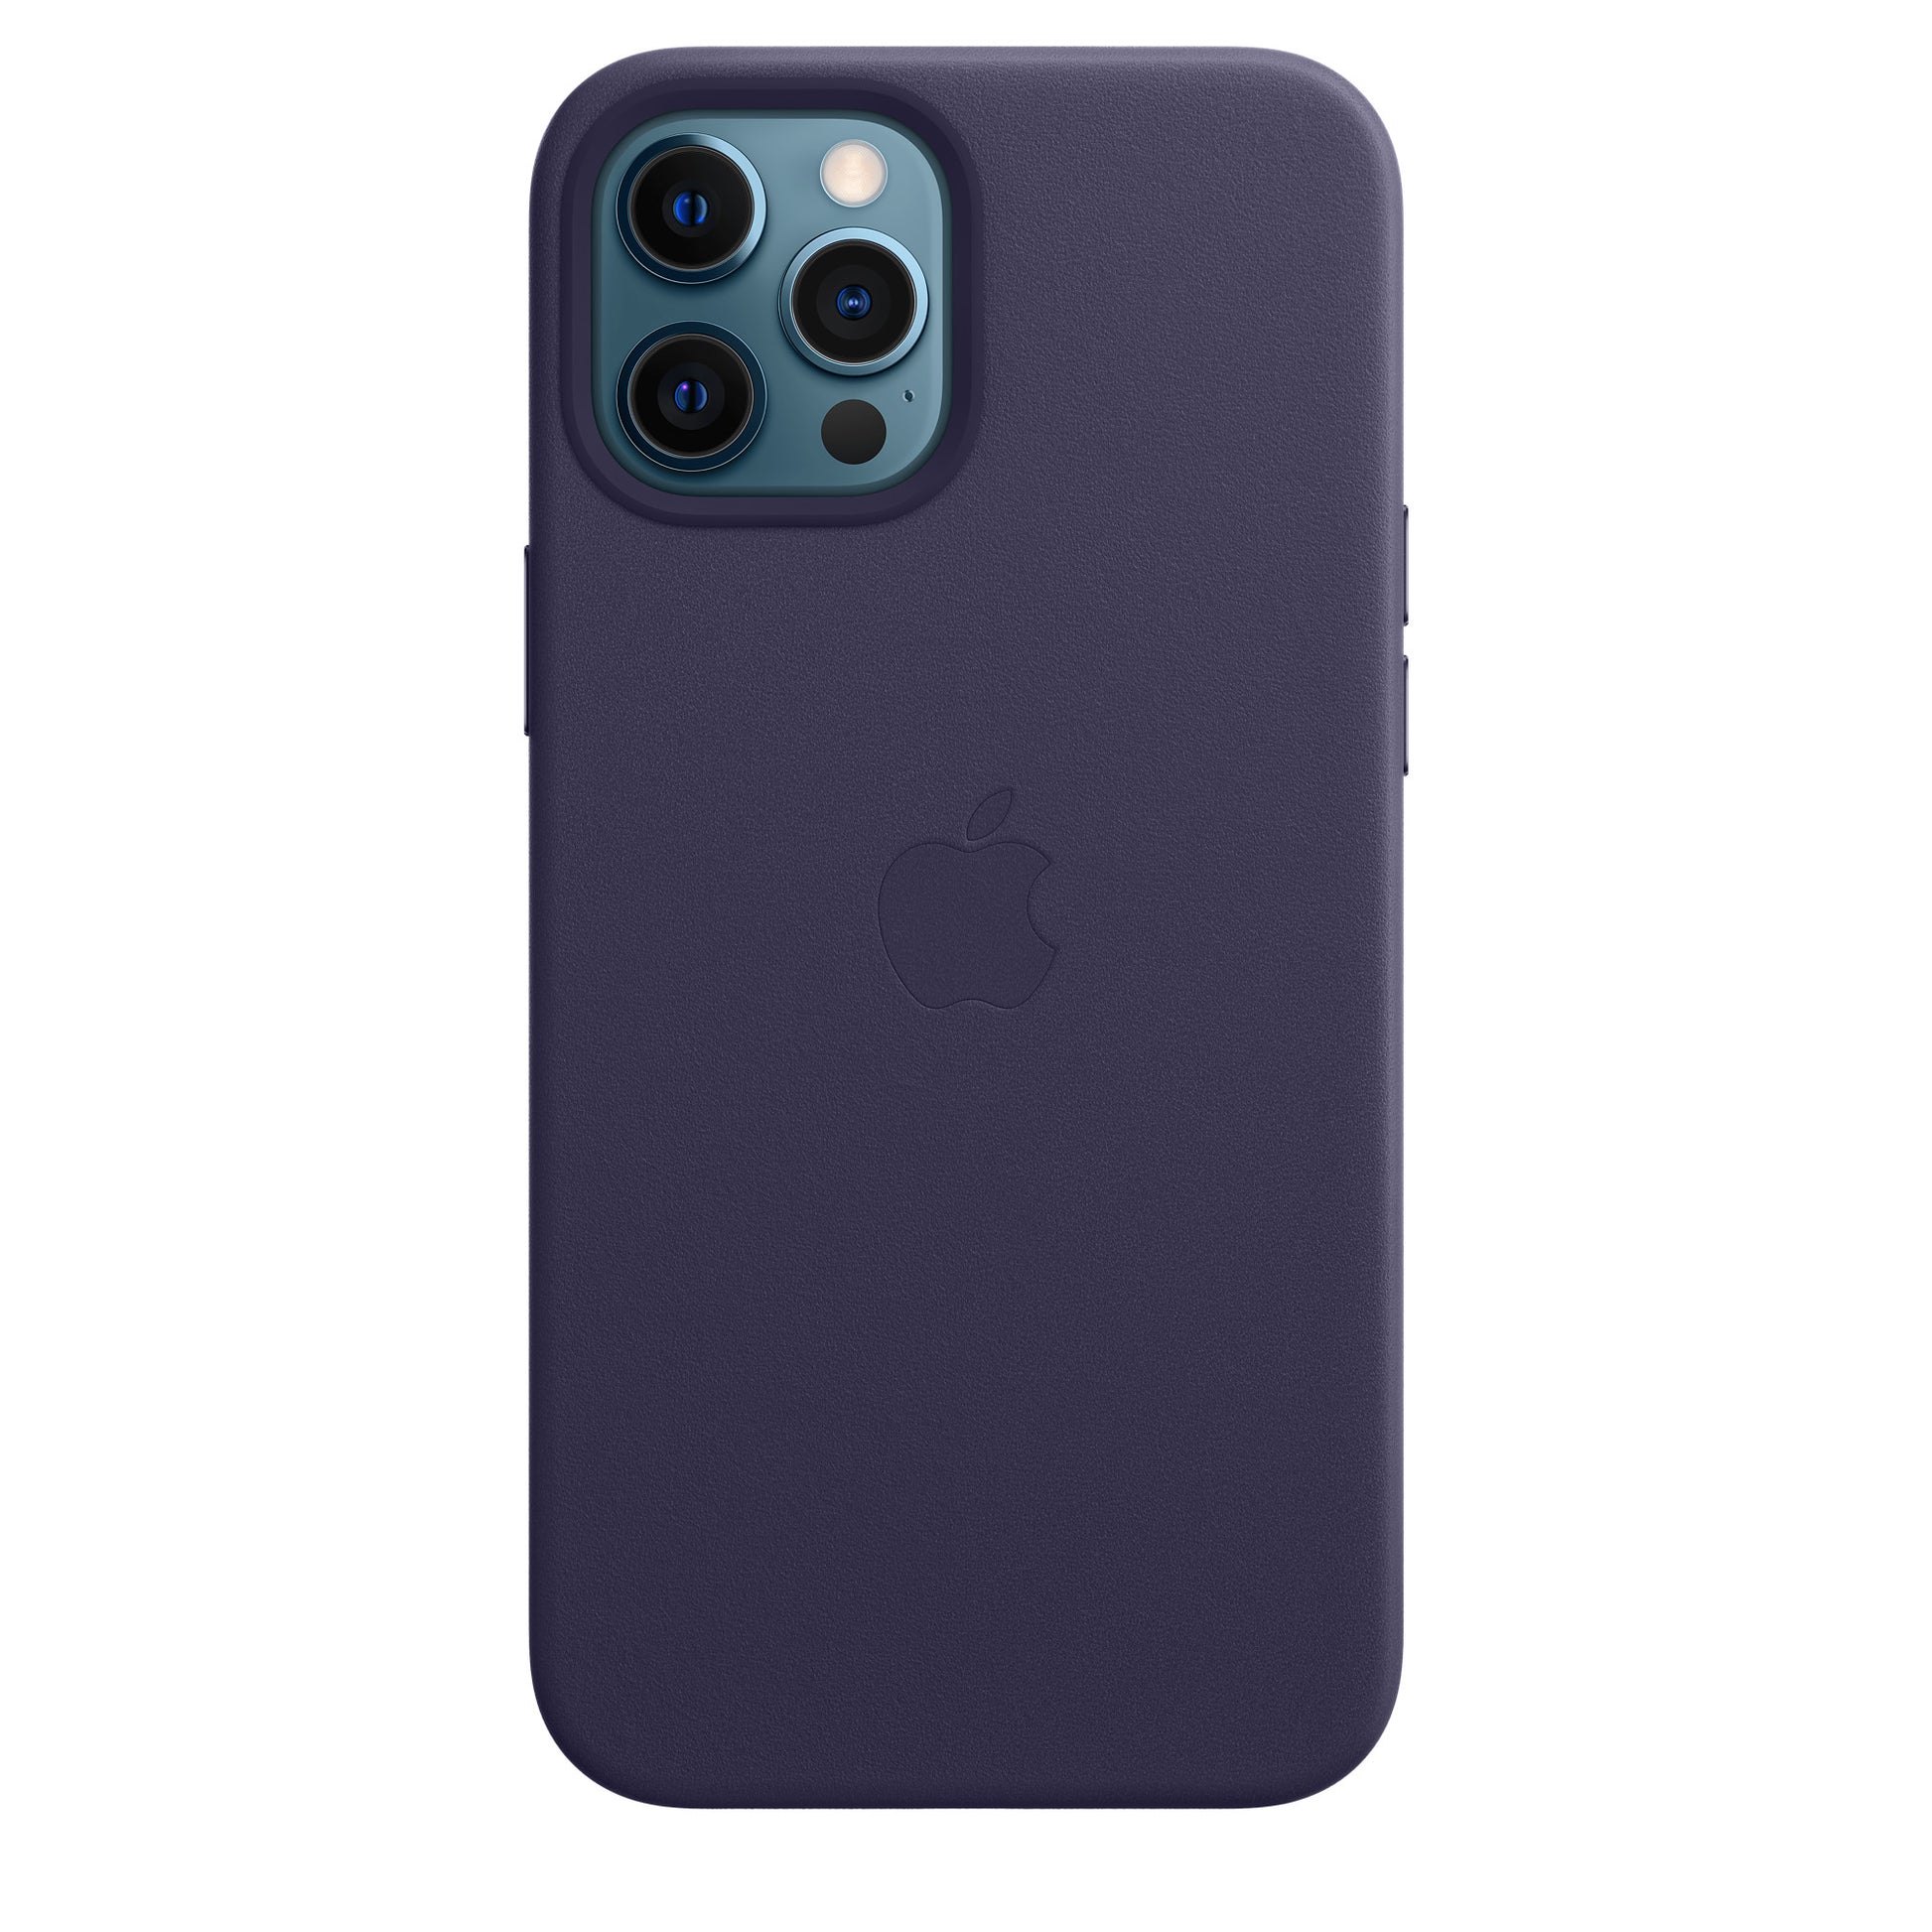 Apple iPhone 12 Pro Max Leather Case Deep Violet Deep Violet New - Sealed